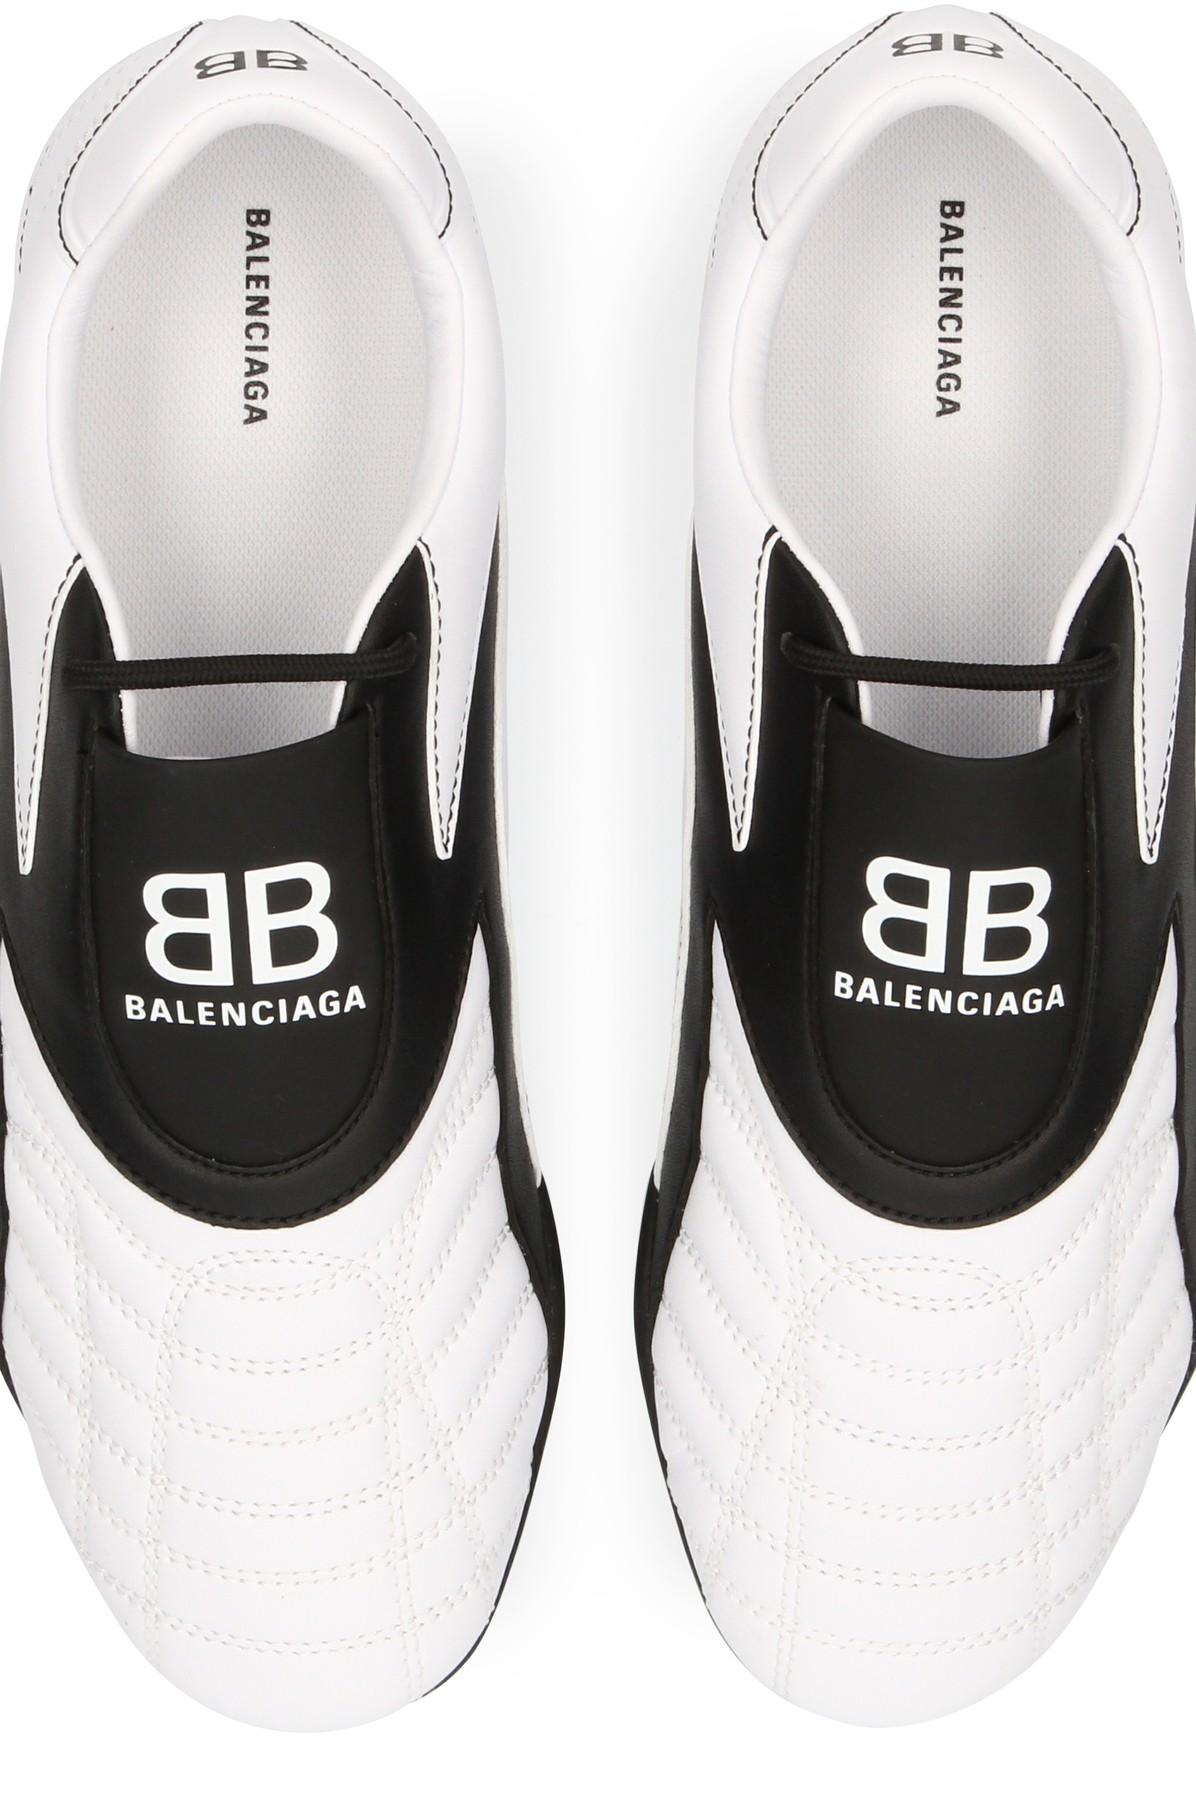 Balenciaga Zen Sneaker in White Black (Black) - Save 18% - Lyst